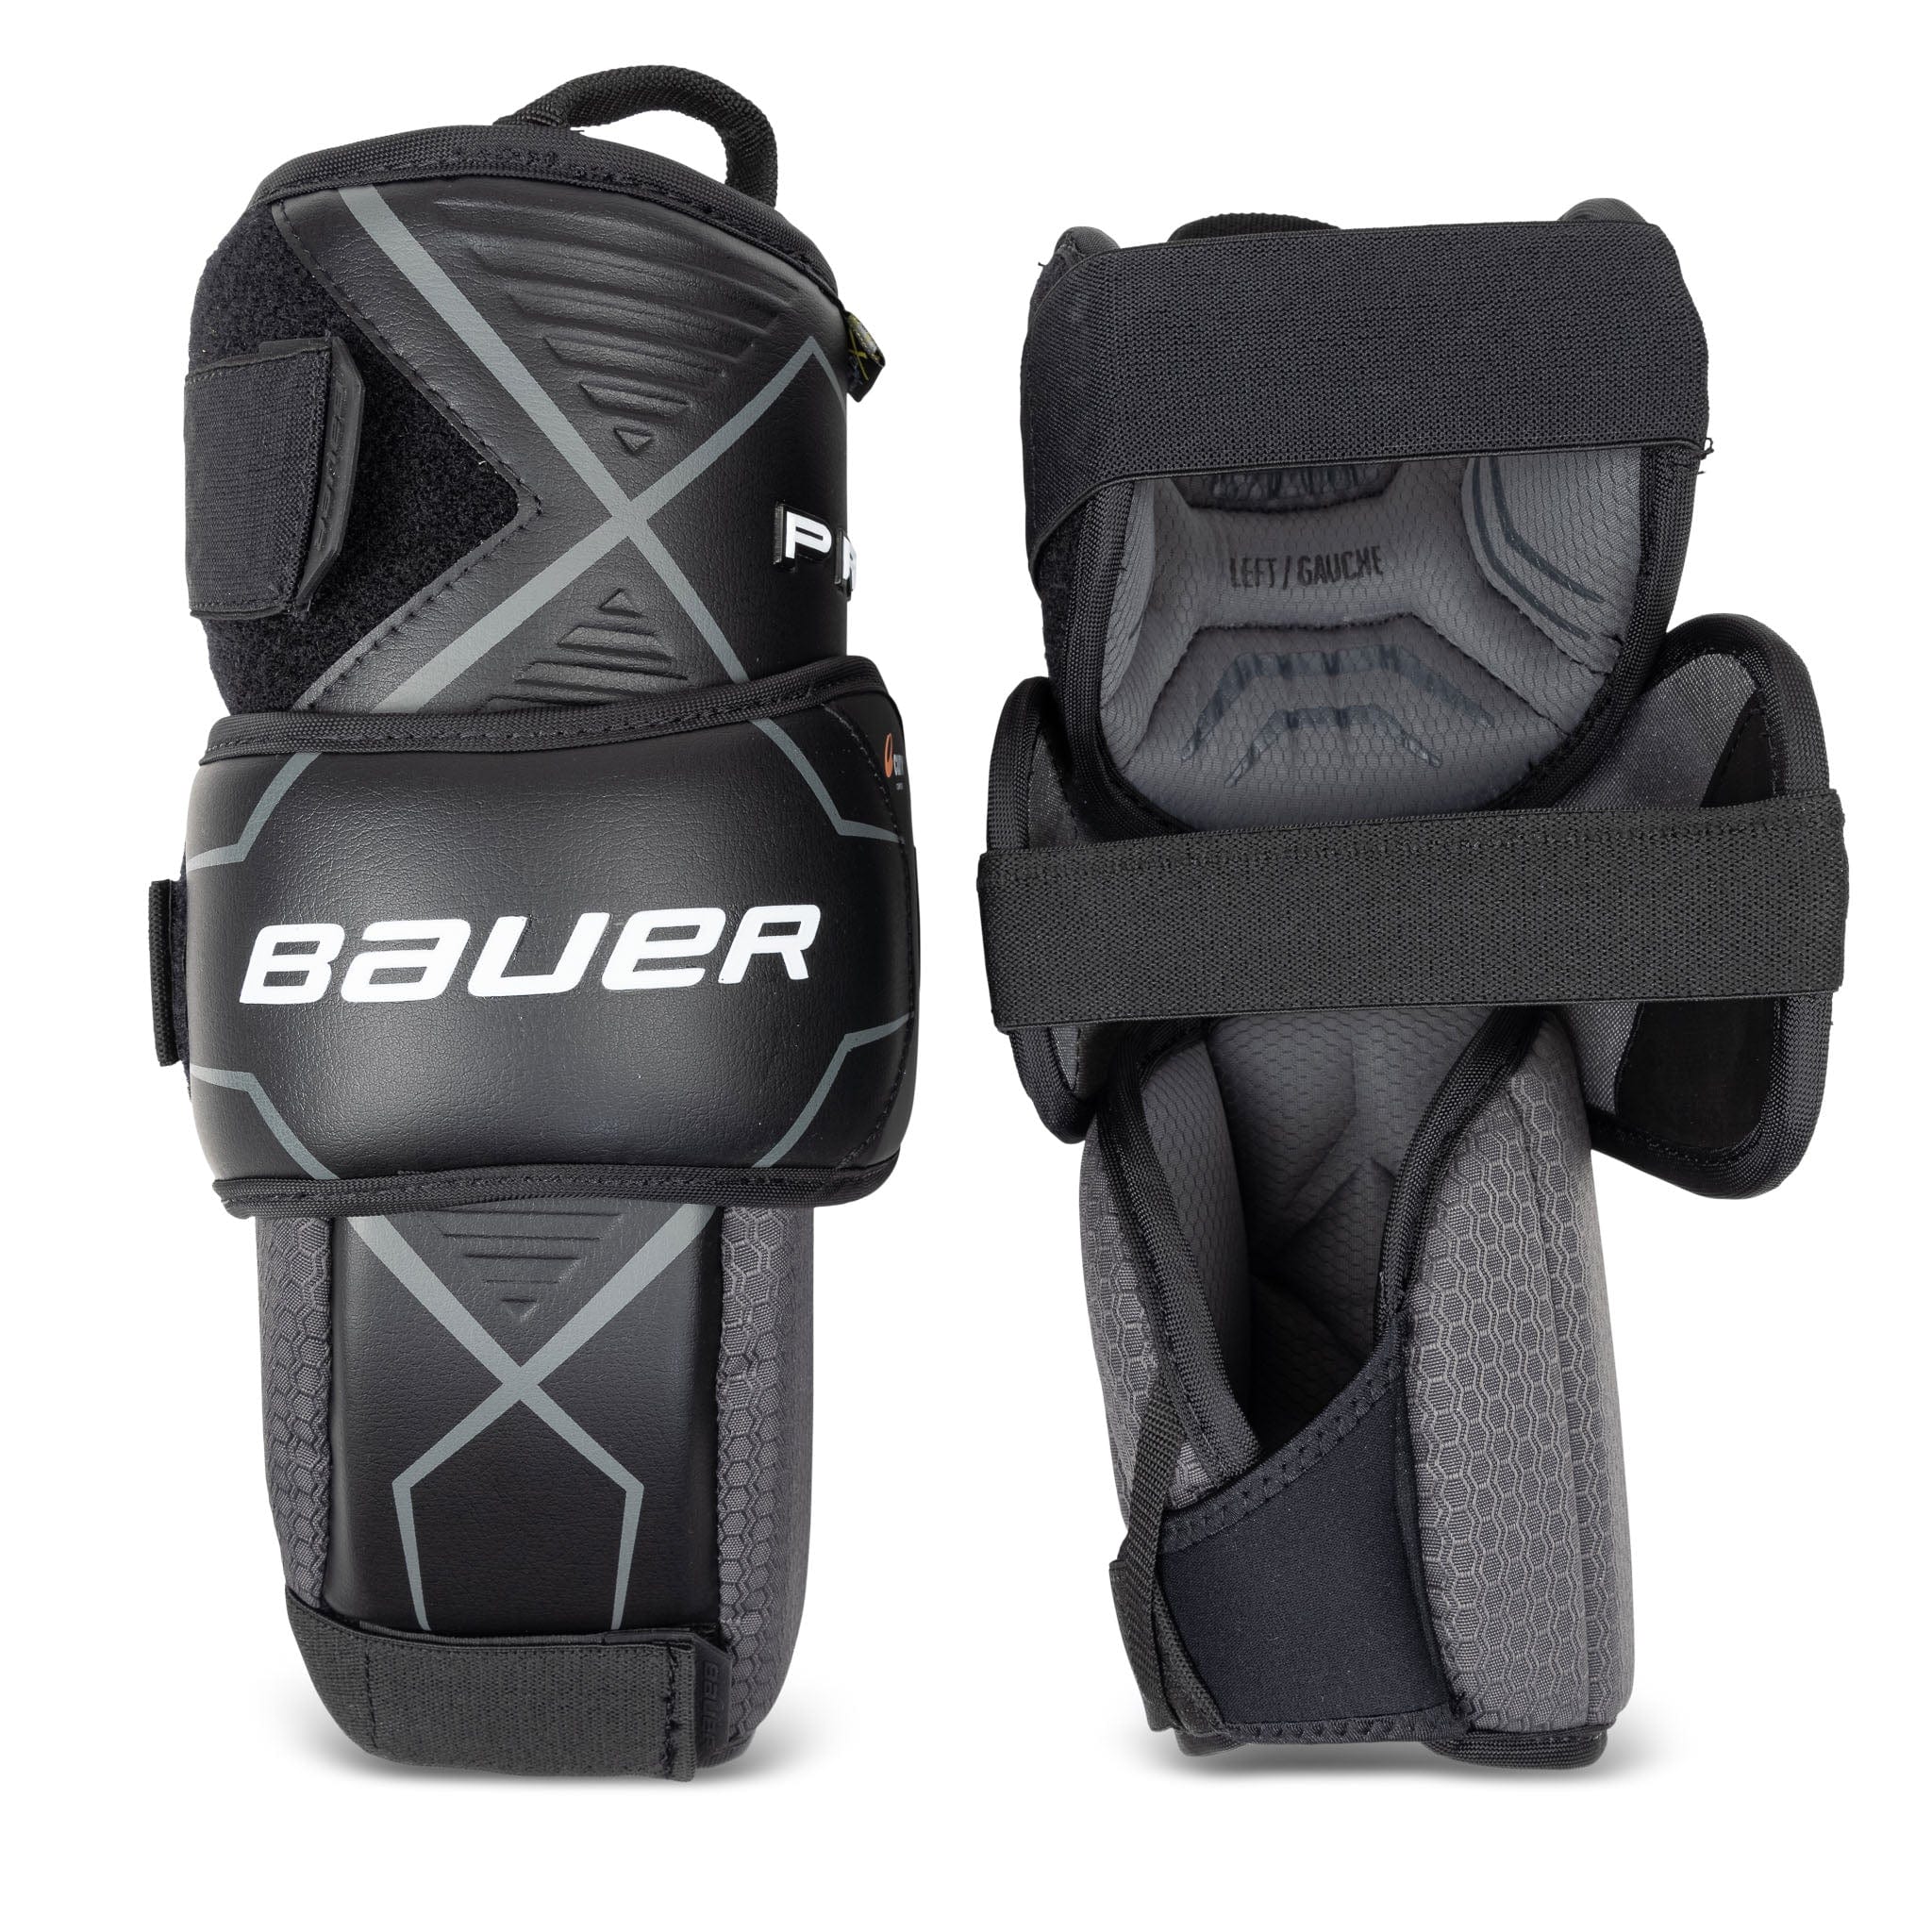 Bauer Pro goalkeeper knee pads, Accessories